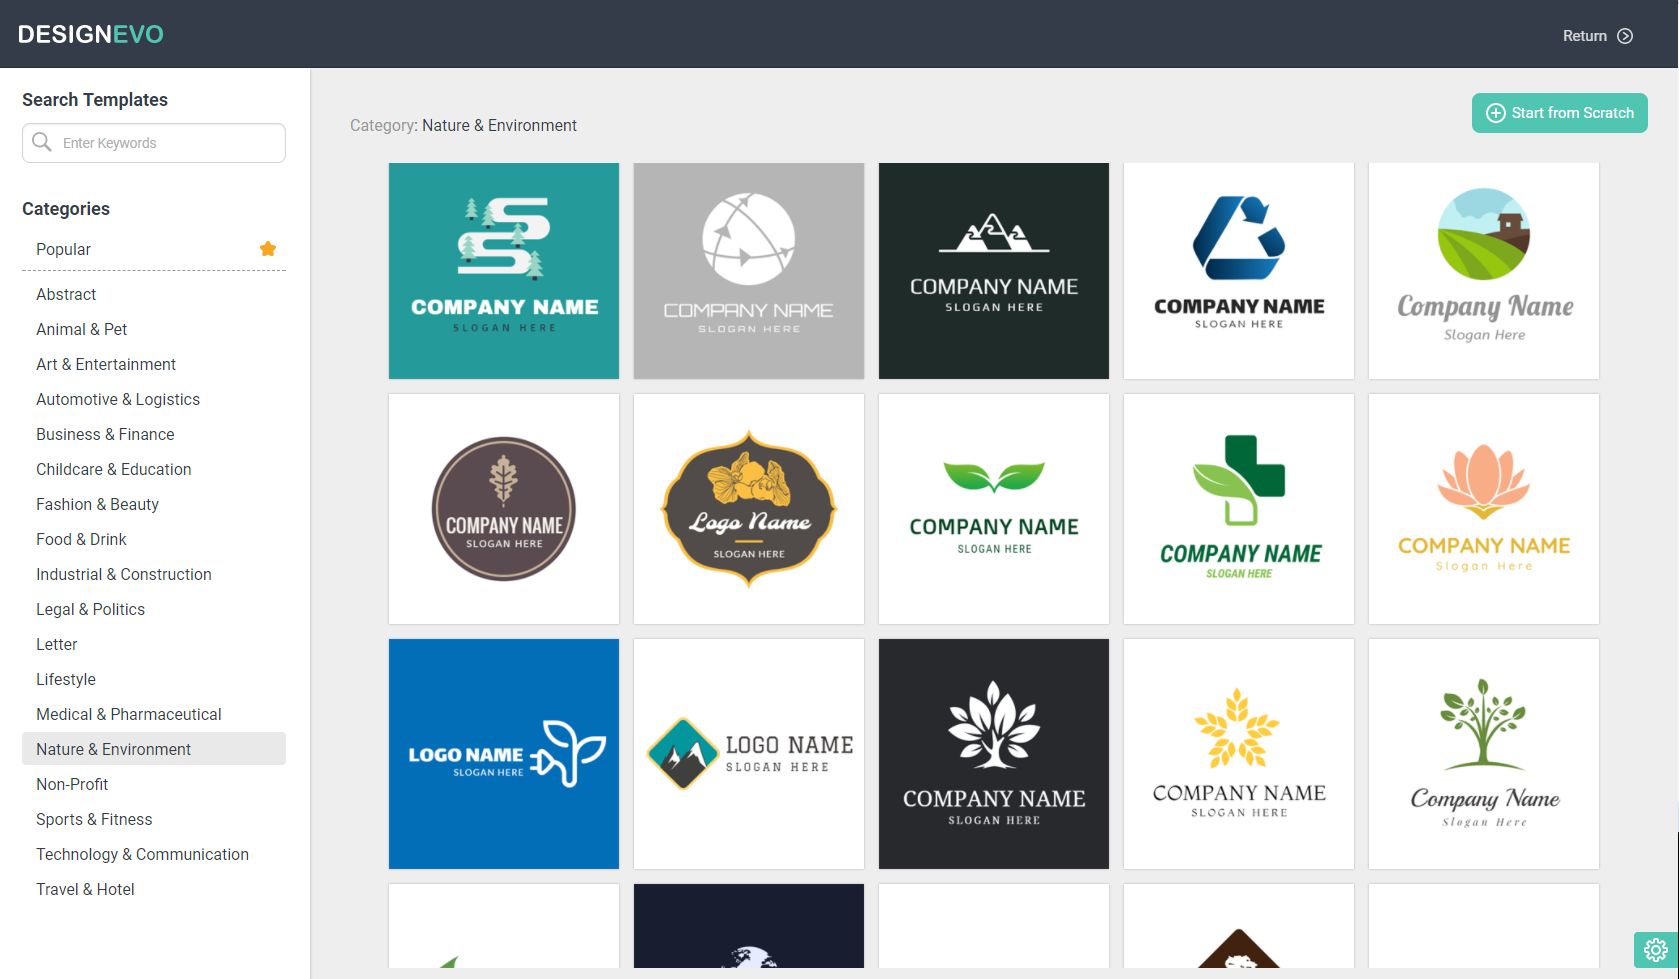 Website Review - DesignEvo Free Online Custom Logo Maker - Random Bits ...